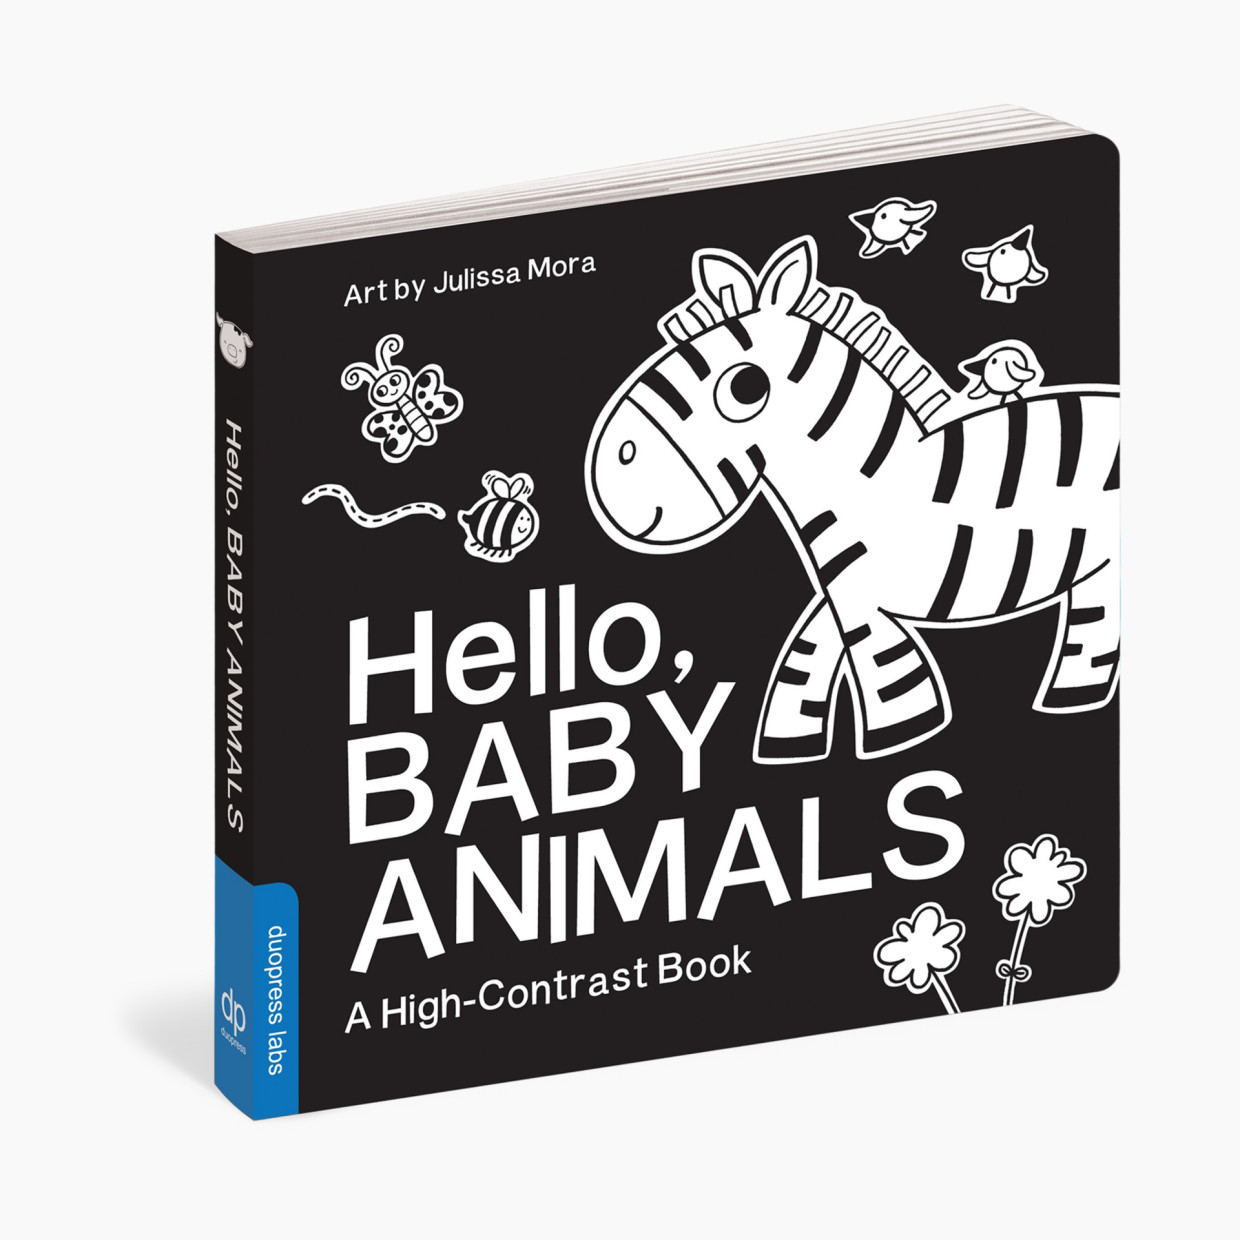 Hello, Baby Animals High-Contrast Board Book.